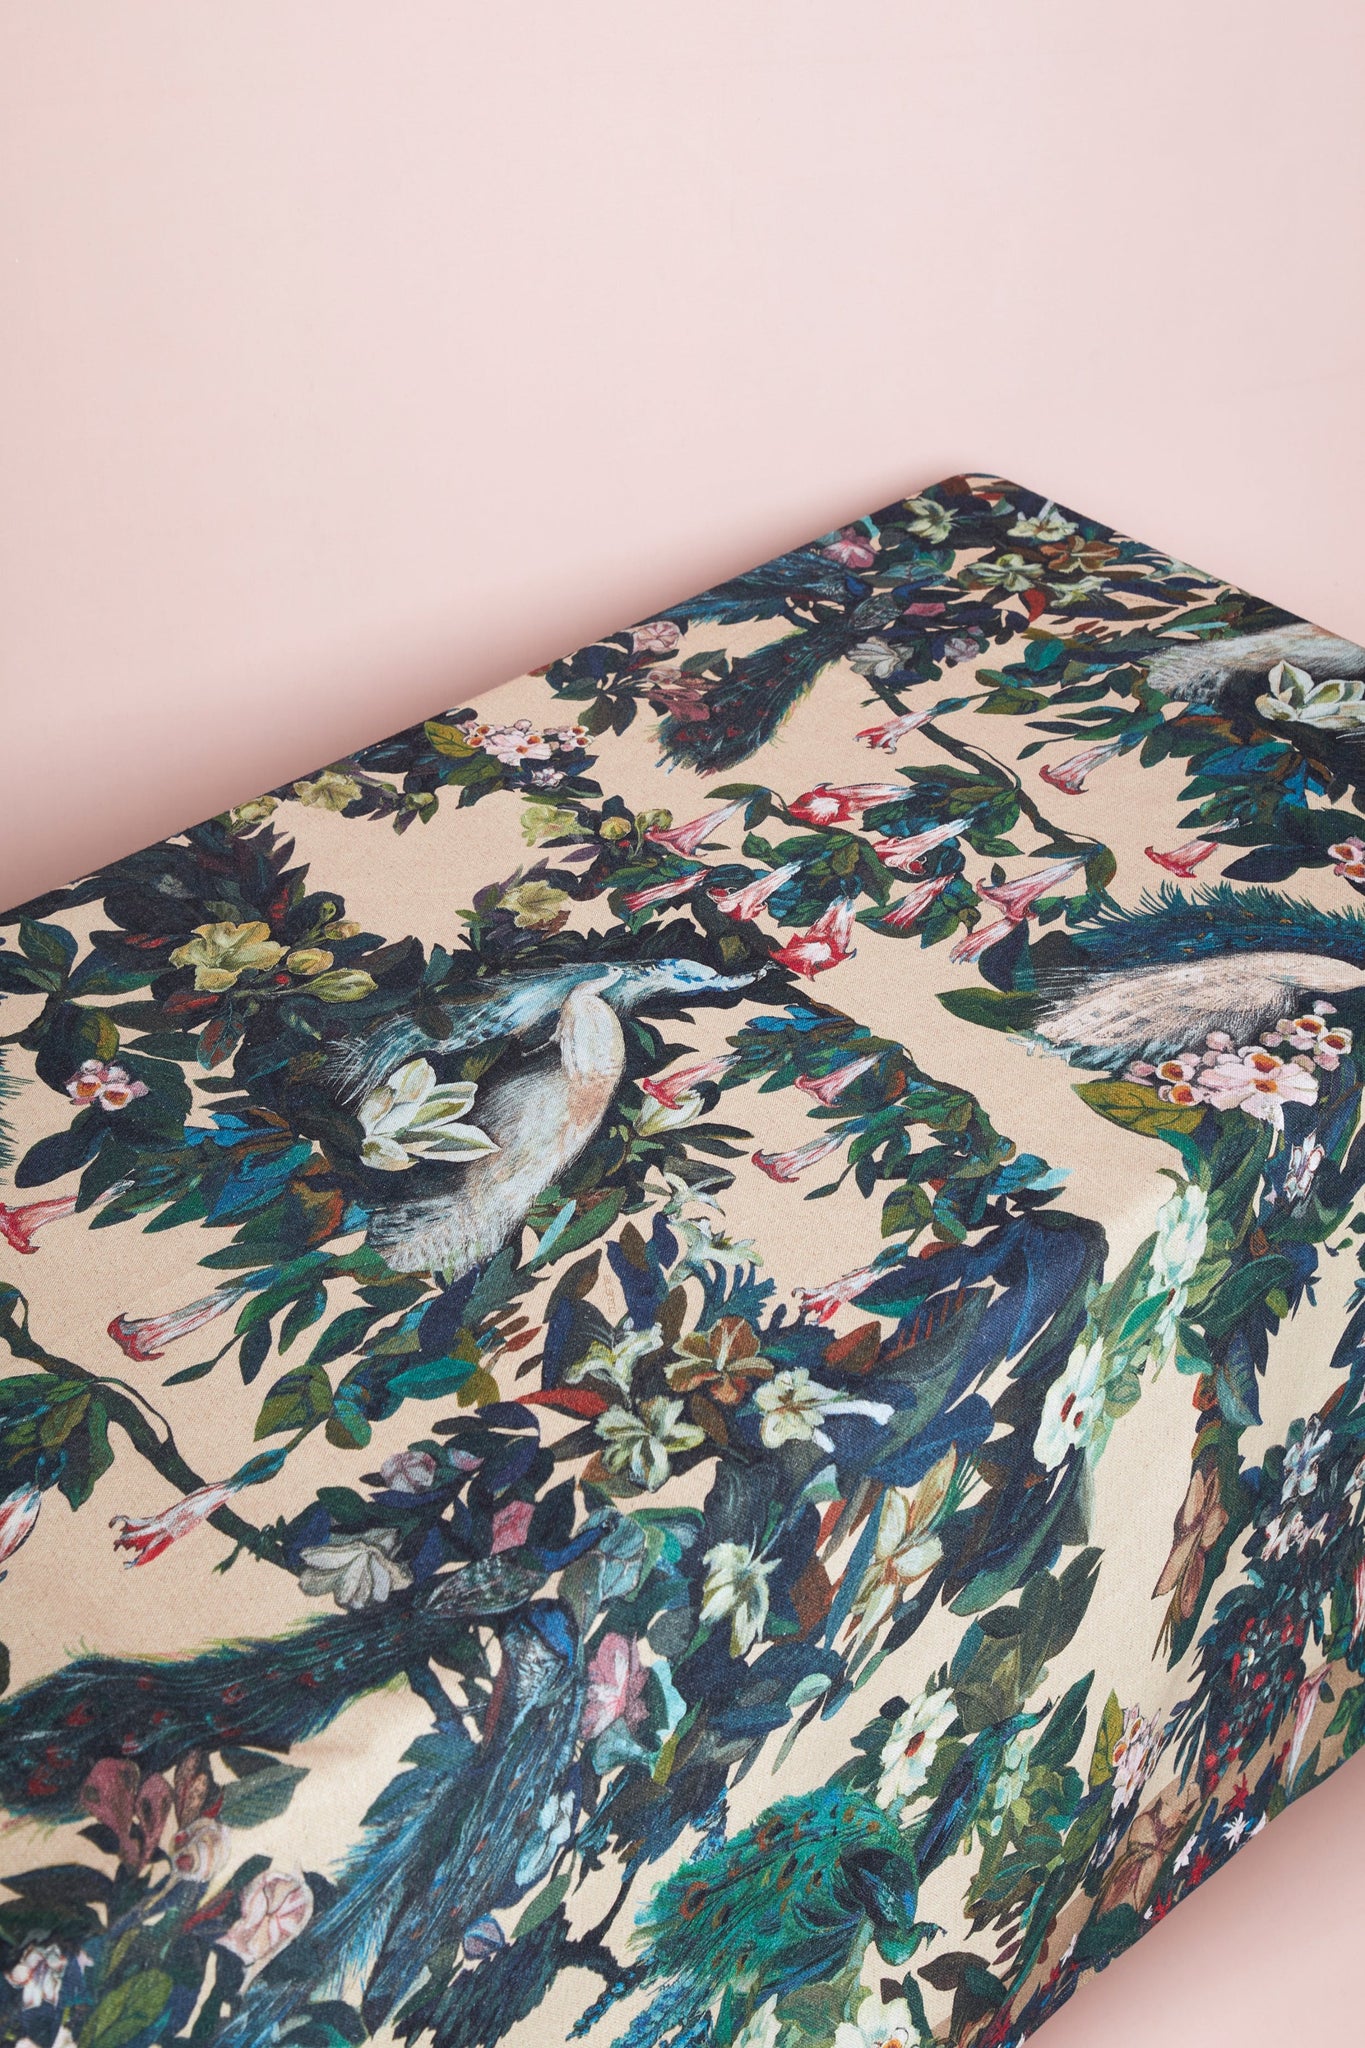 "Peacocks" printed tablecloth